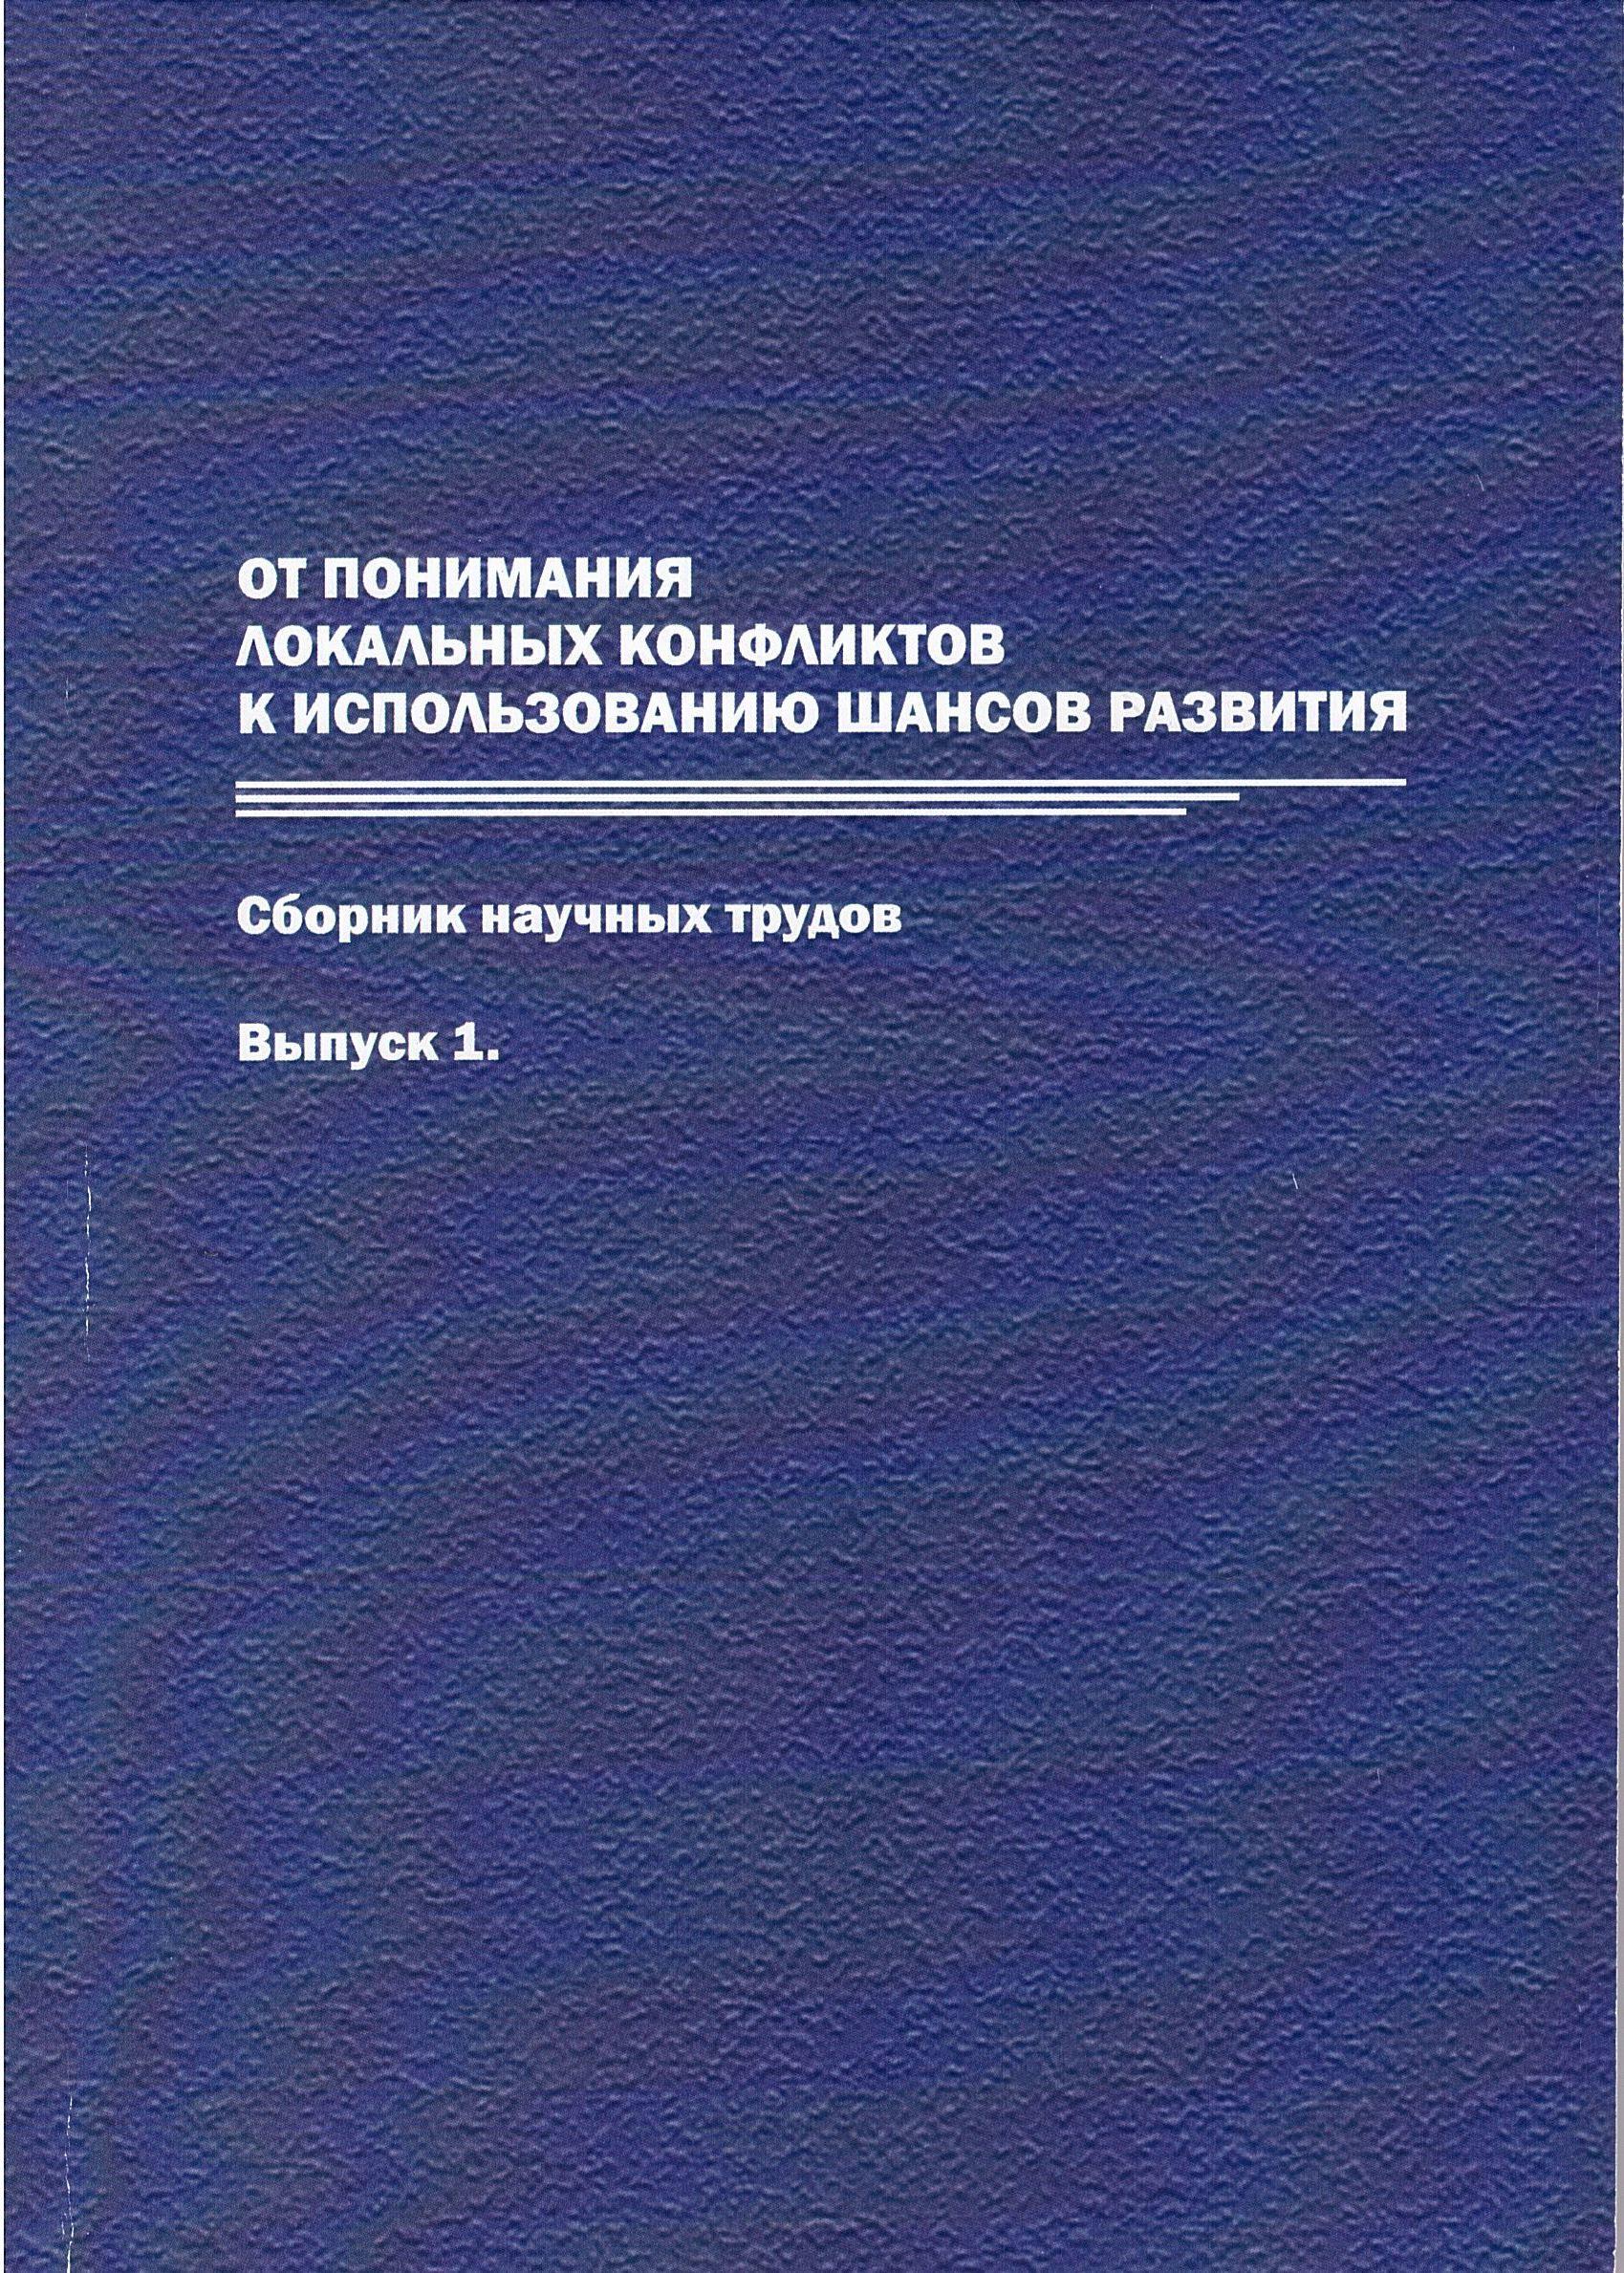 Cover Vol. 1